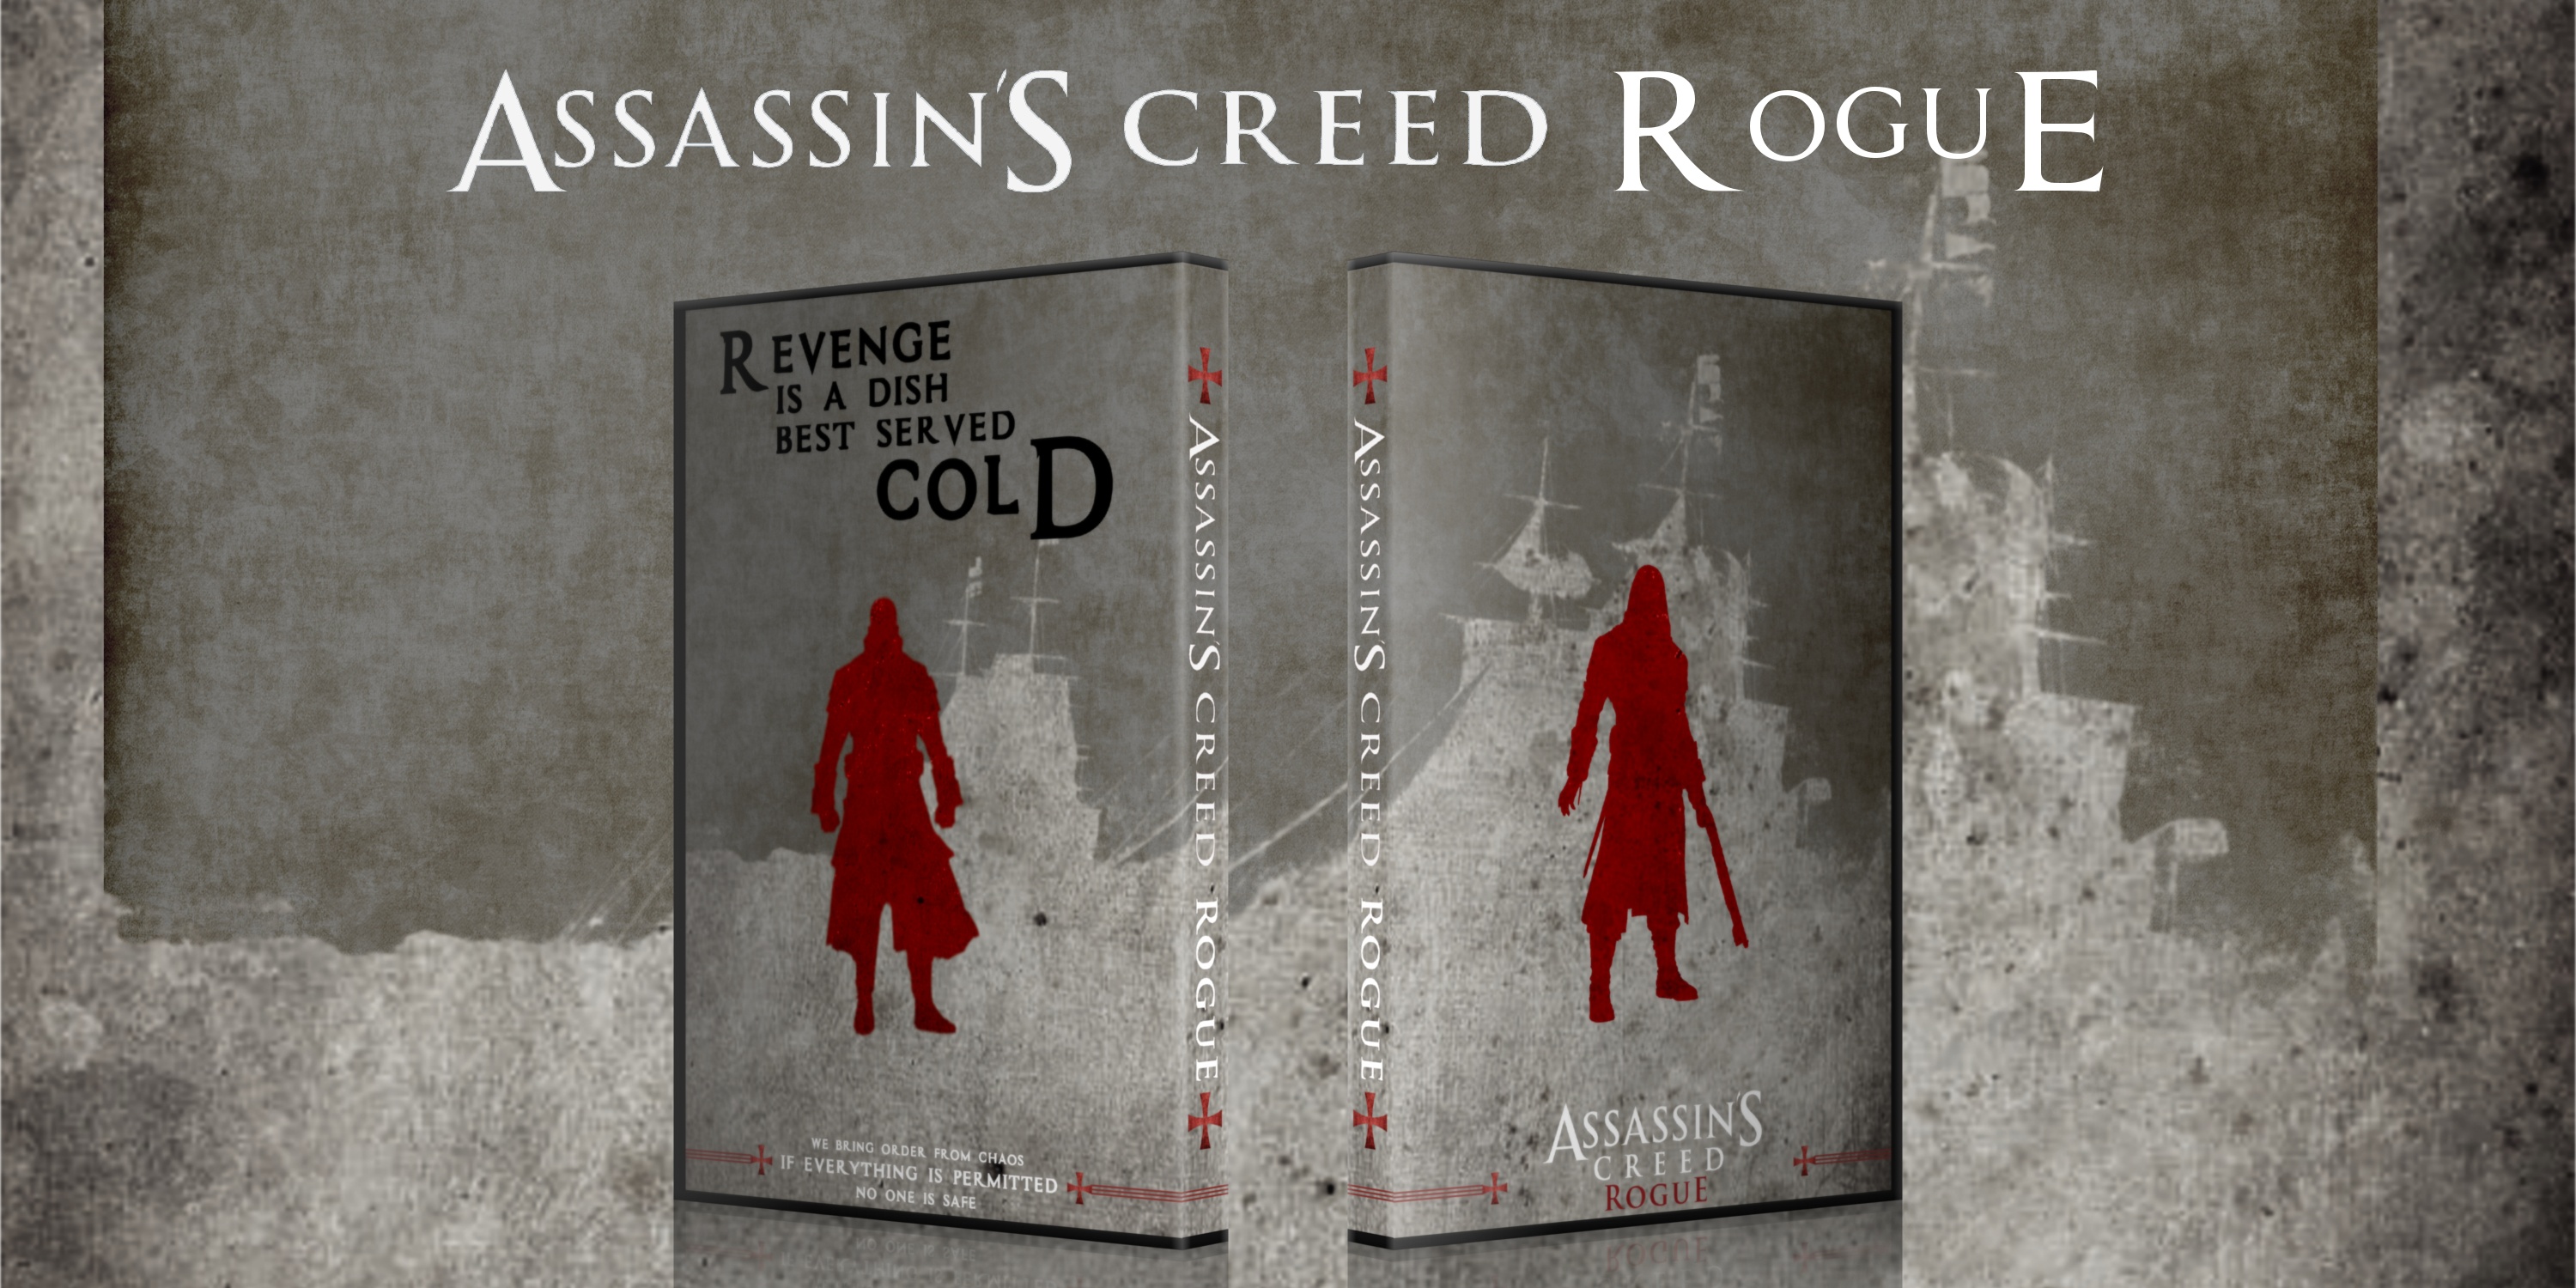 Assassin's Creed Rogue box cover